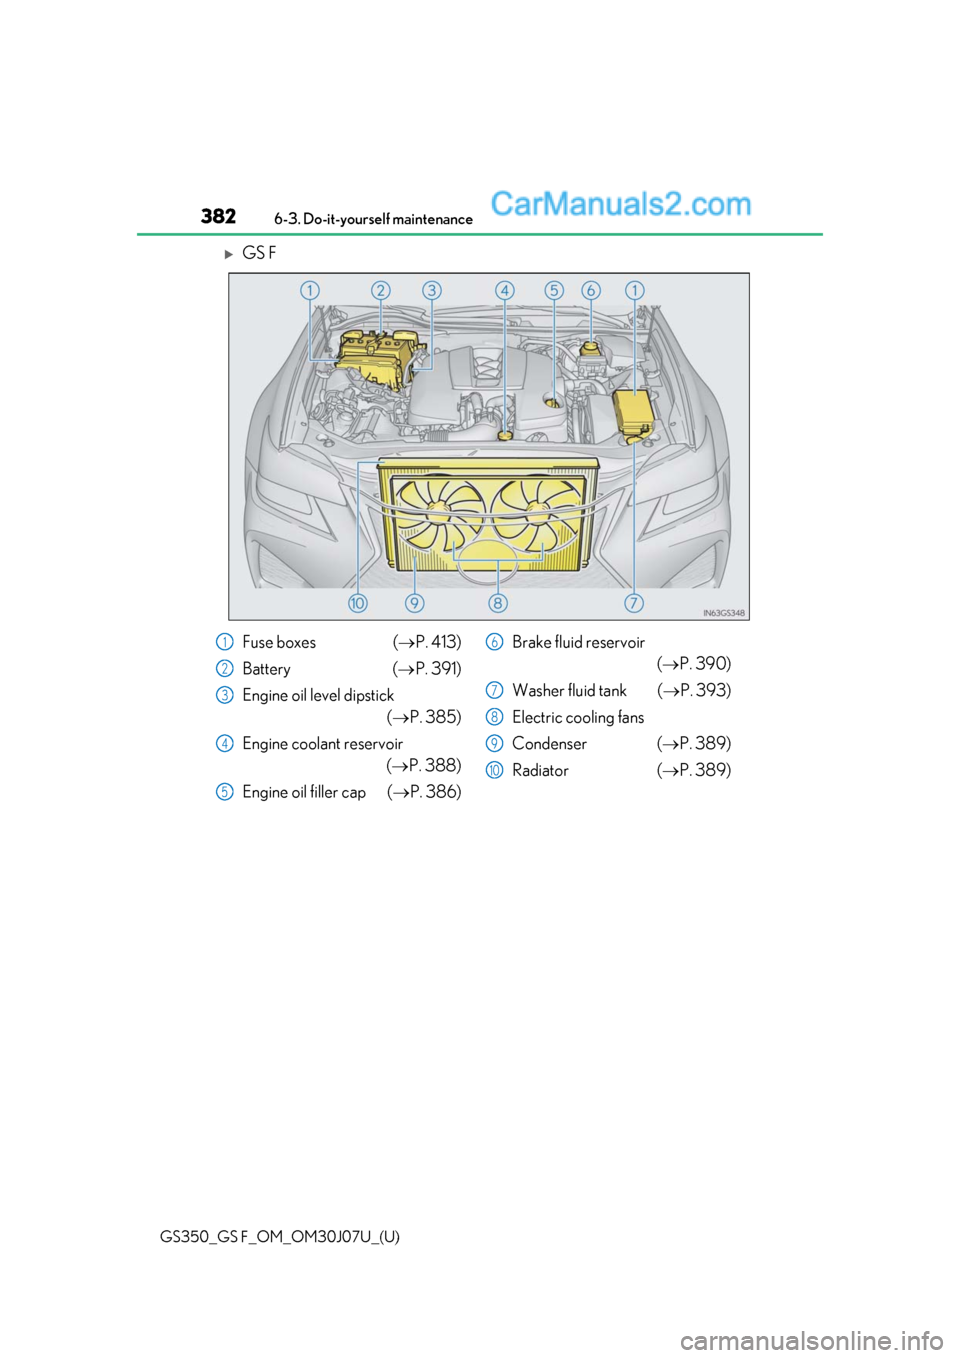 Lexus GS350 2020  Owners Manual 382
GS350_GS F_OM_OM30J07U_(U)6-3. Do-it-yourself maintenance
GS F
Fuse boxes (
P. 413)
Battery ( P. 391)
Engine oil level dipstick (P. 385)
Engine coolant reservoir (P. 388)
Engine oil